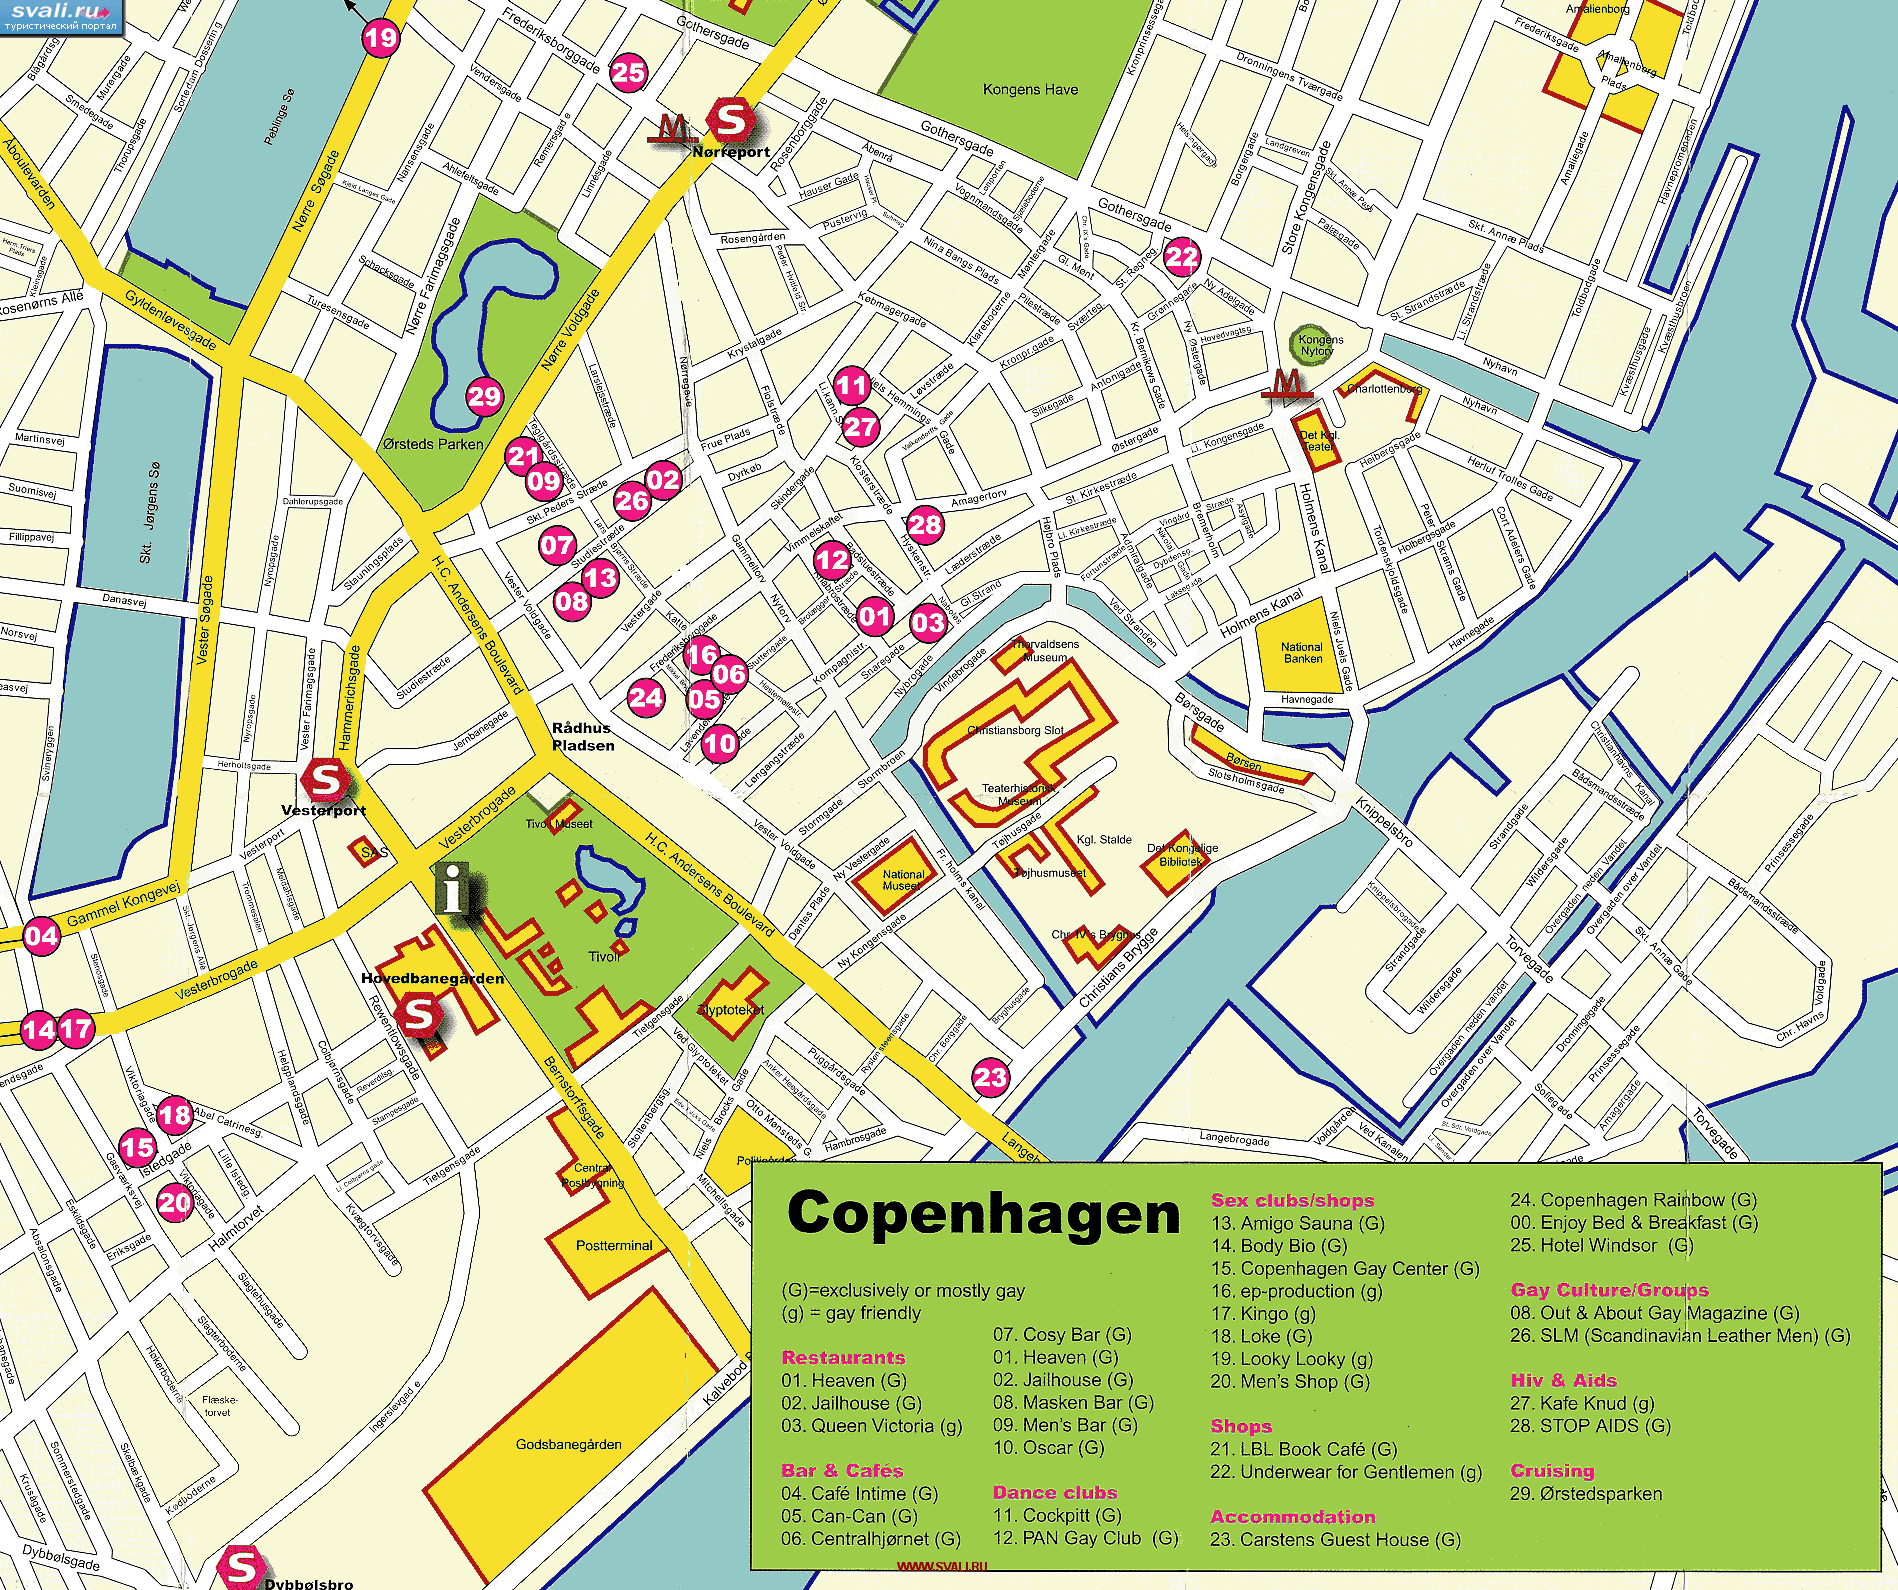 Карта центра Копенгагена для геев, Дания (дат.)